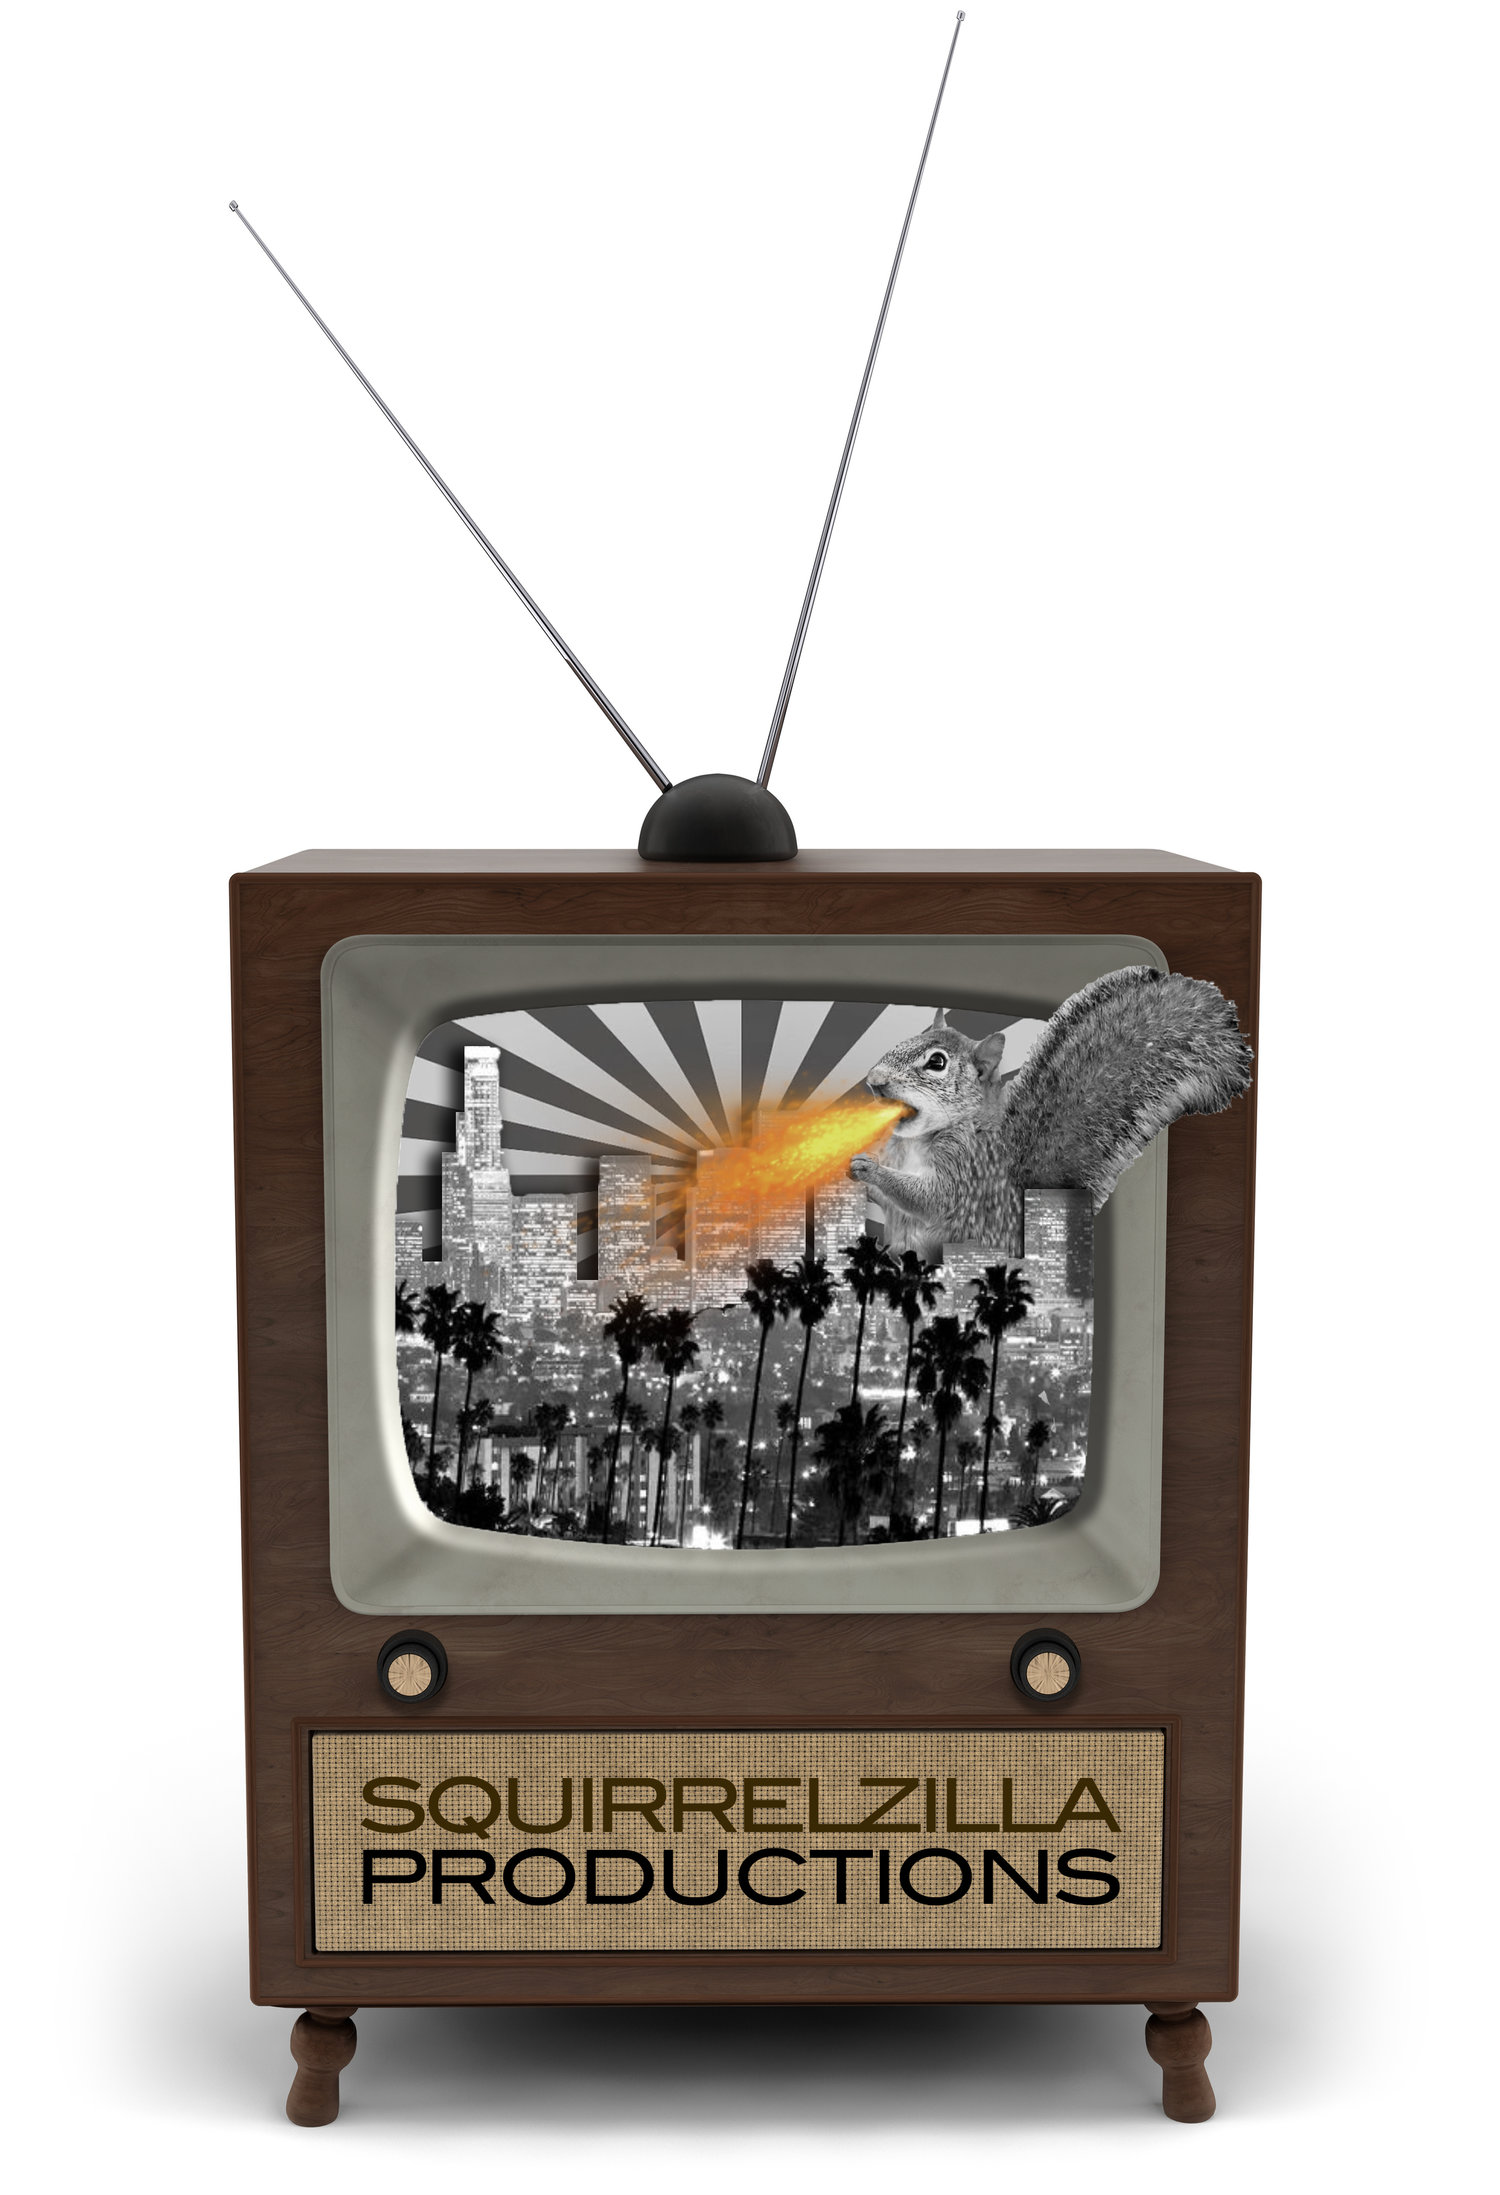 SQUIRRELZILLA Productions